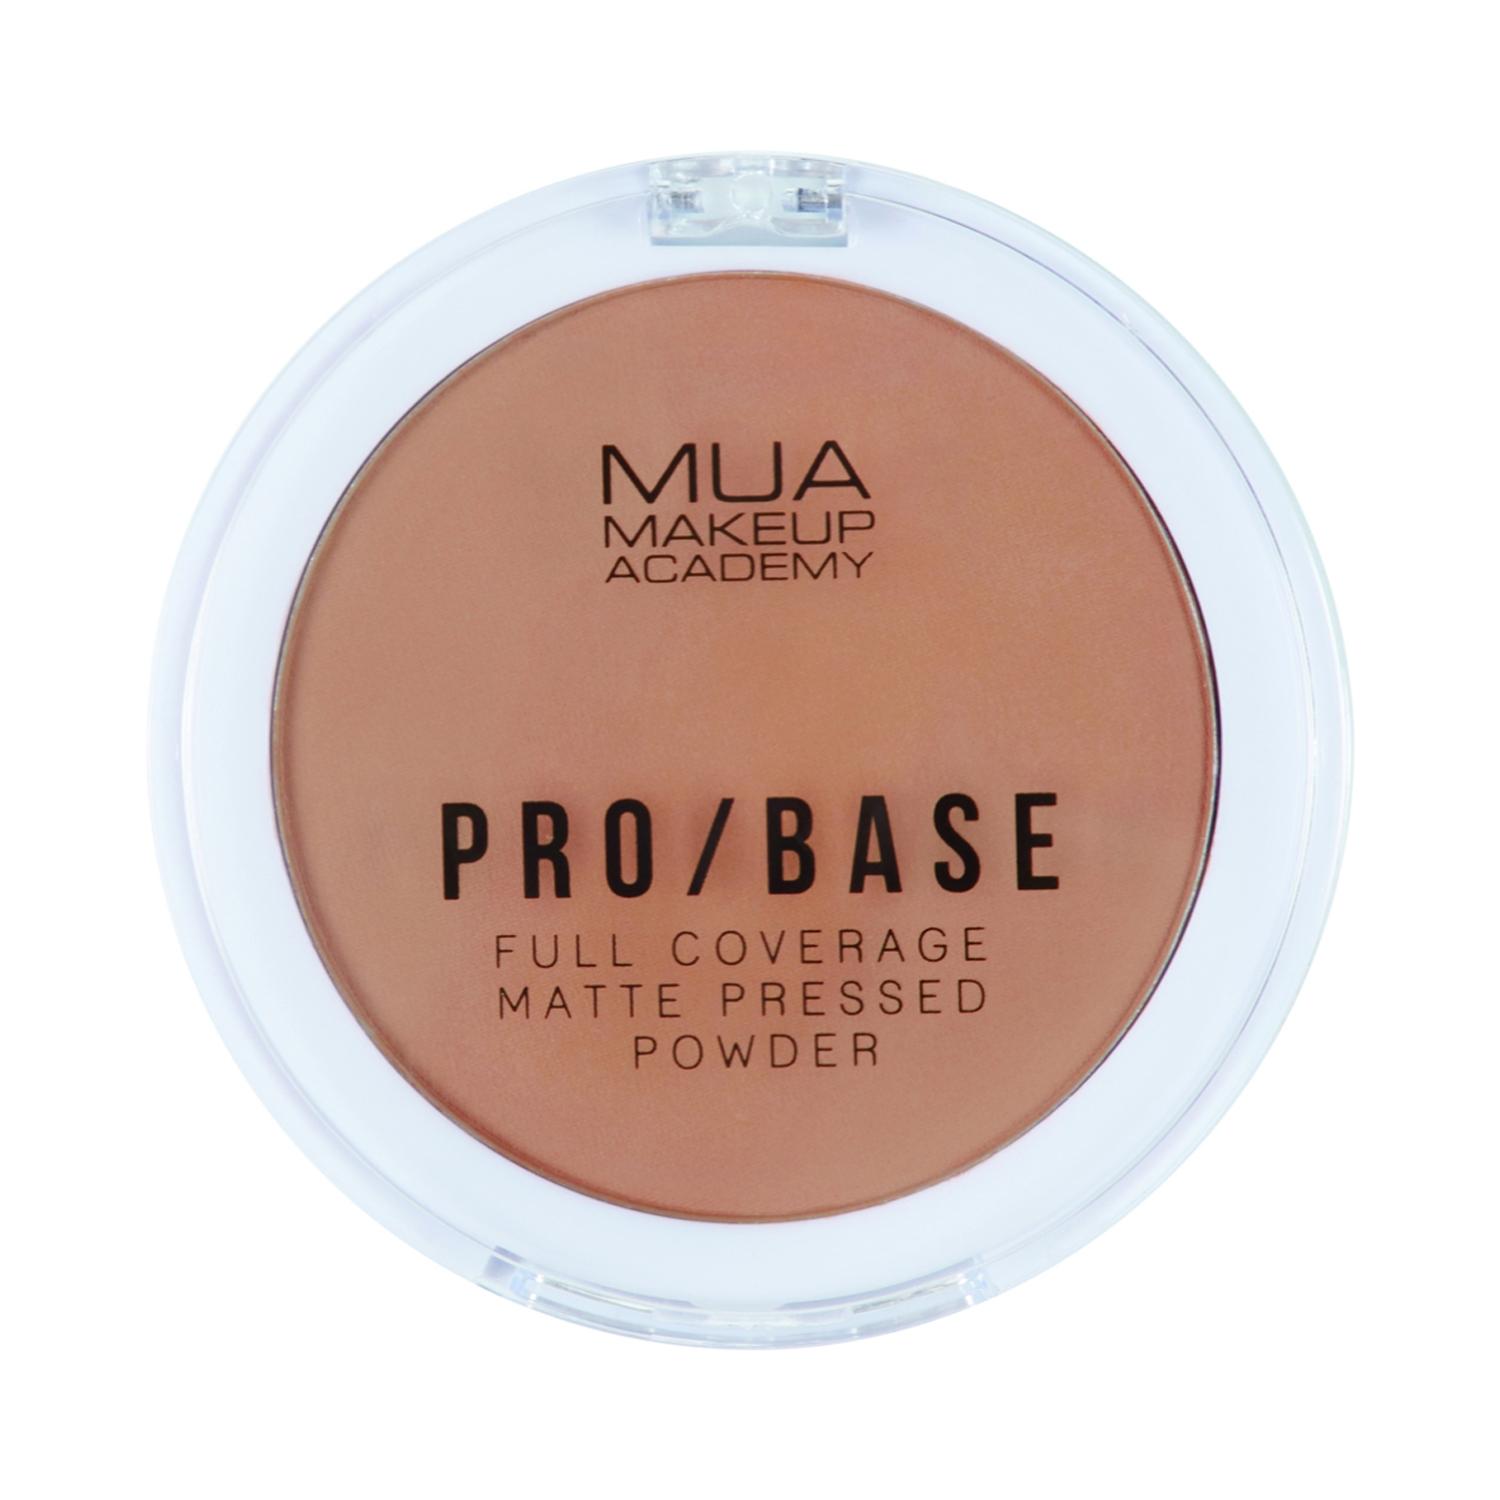 mua make up academy pro / base full cover matte powder - no. 160 (6.5g)